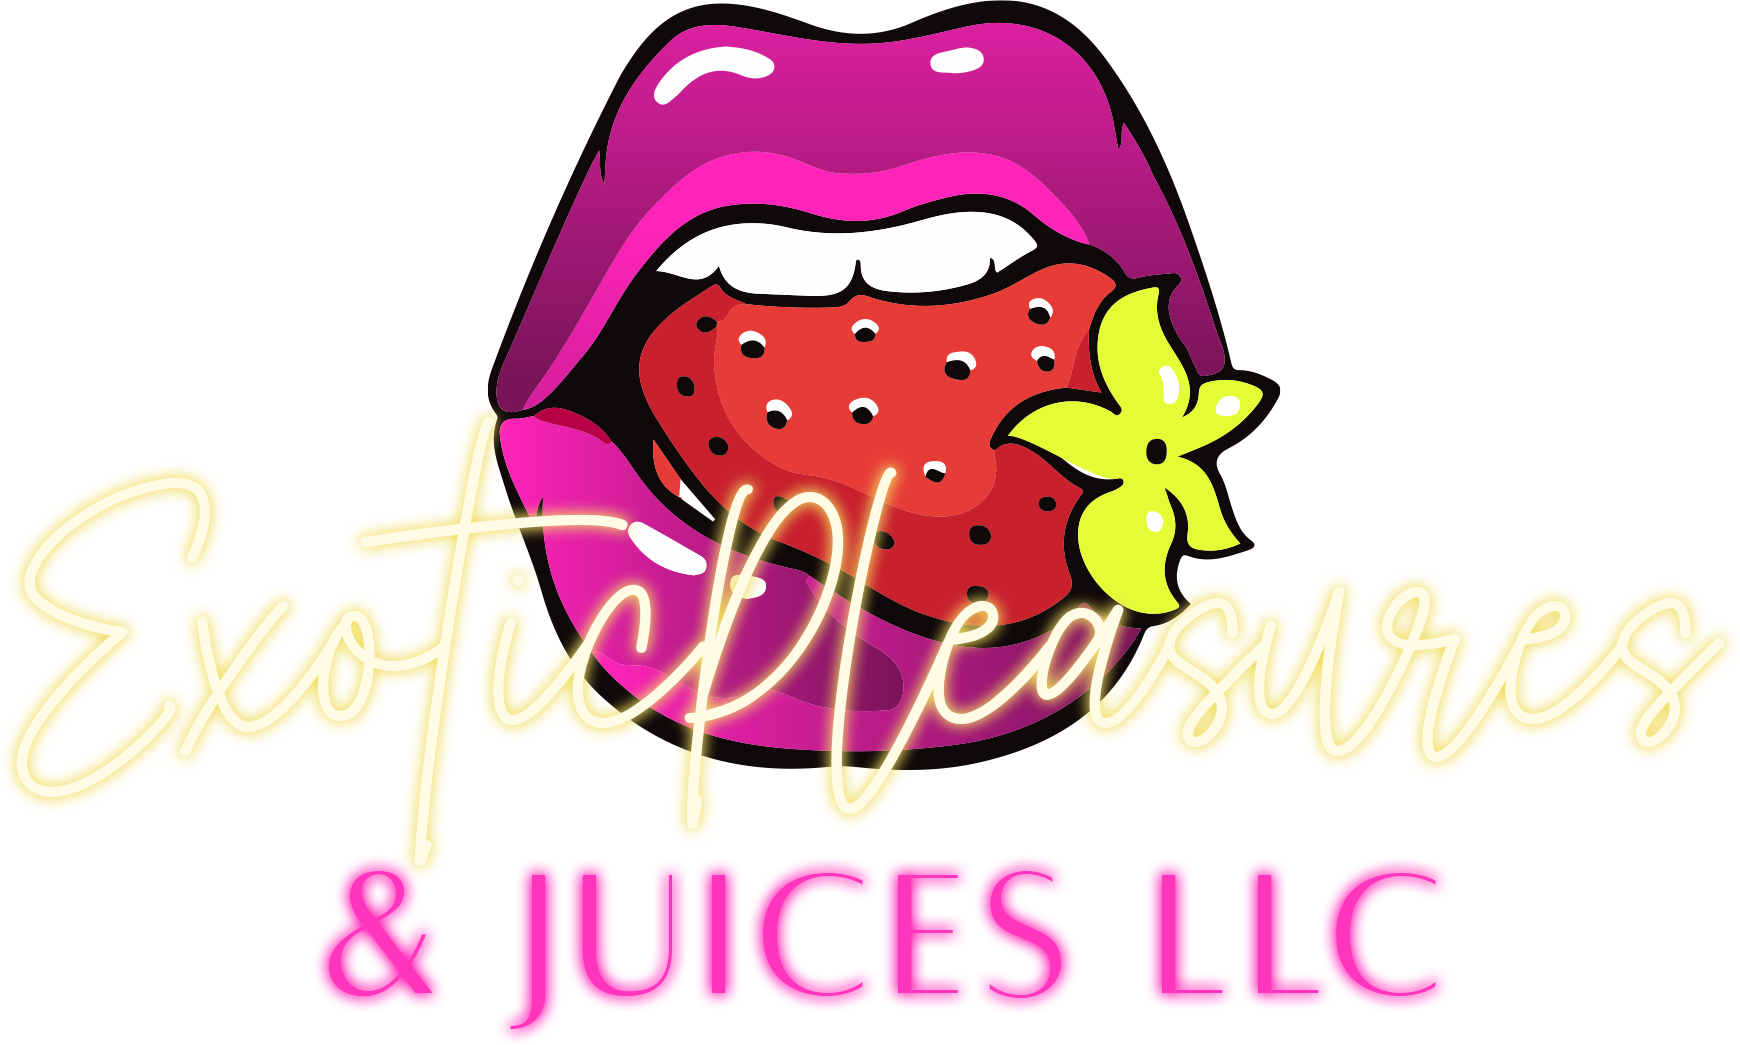 Exotic pleasure & Juices LLC